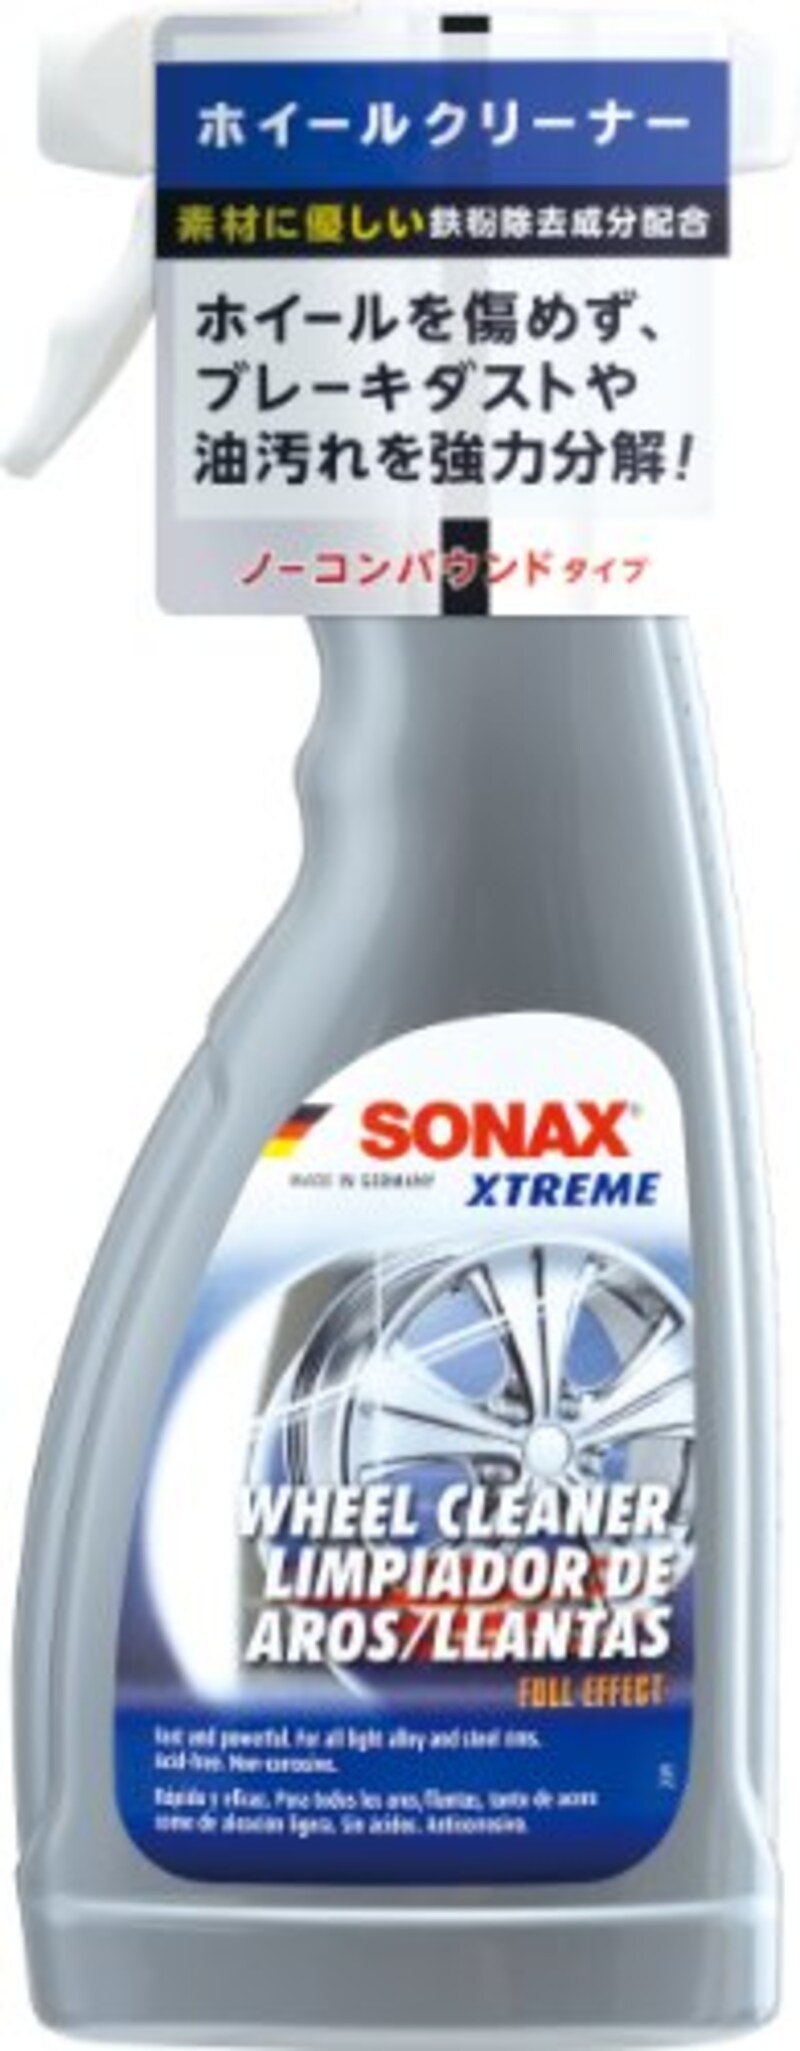 sonax（ソナックス）,エクストリーム ホイールクリーナー,230200